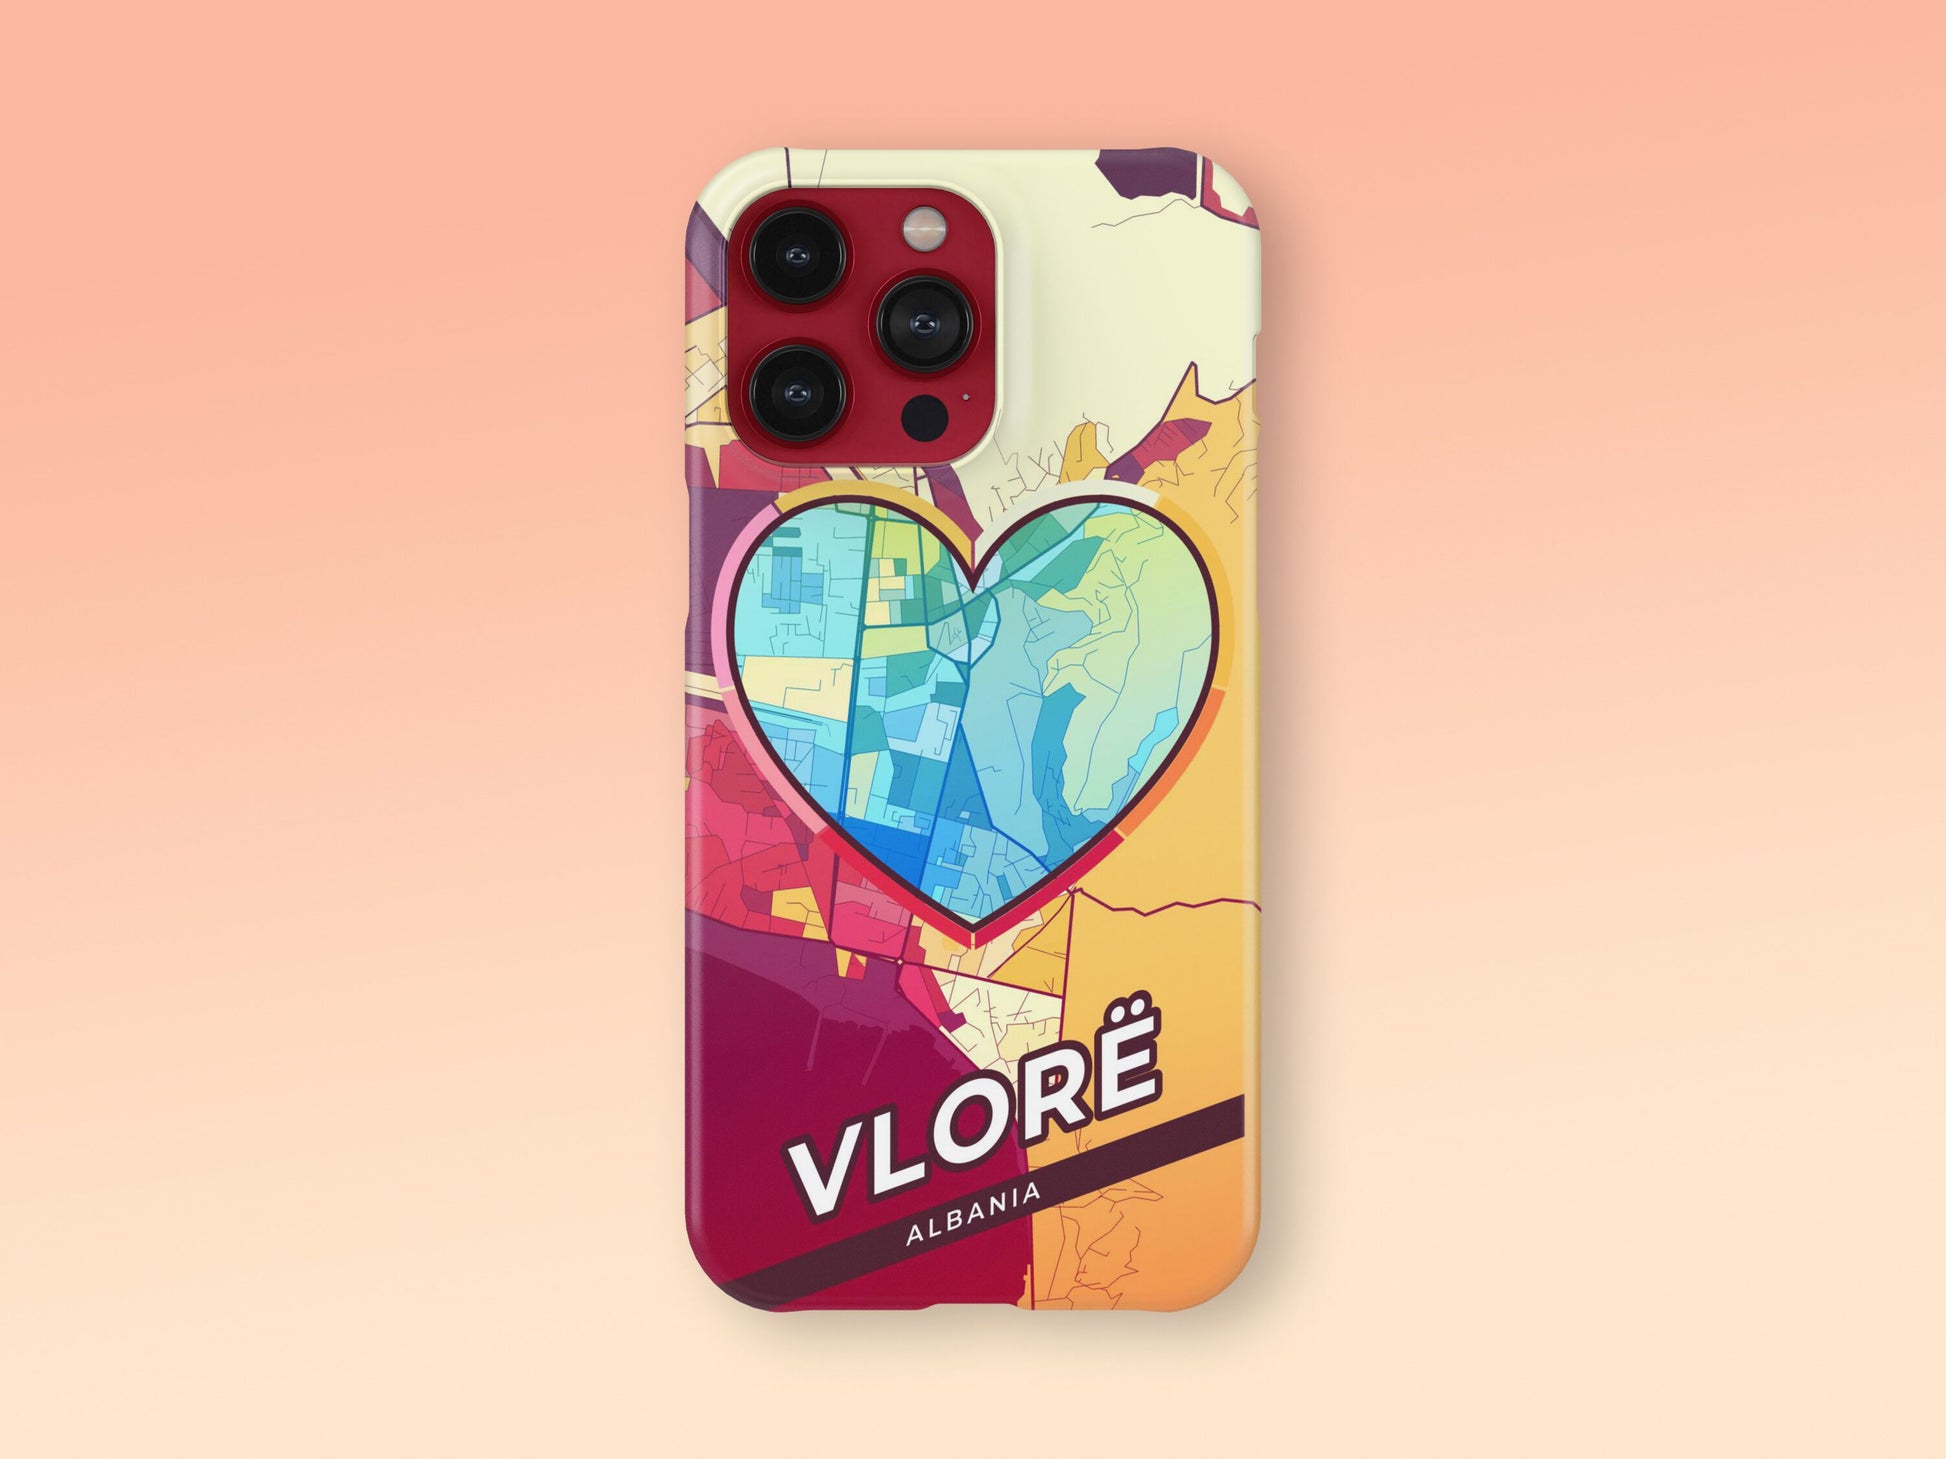 Vlorë Albania slim phone case with colorful icon 2